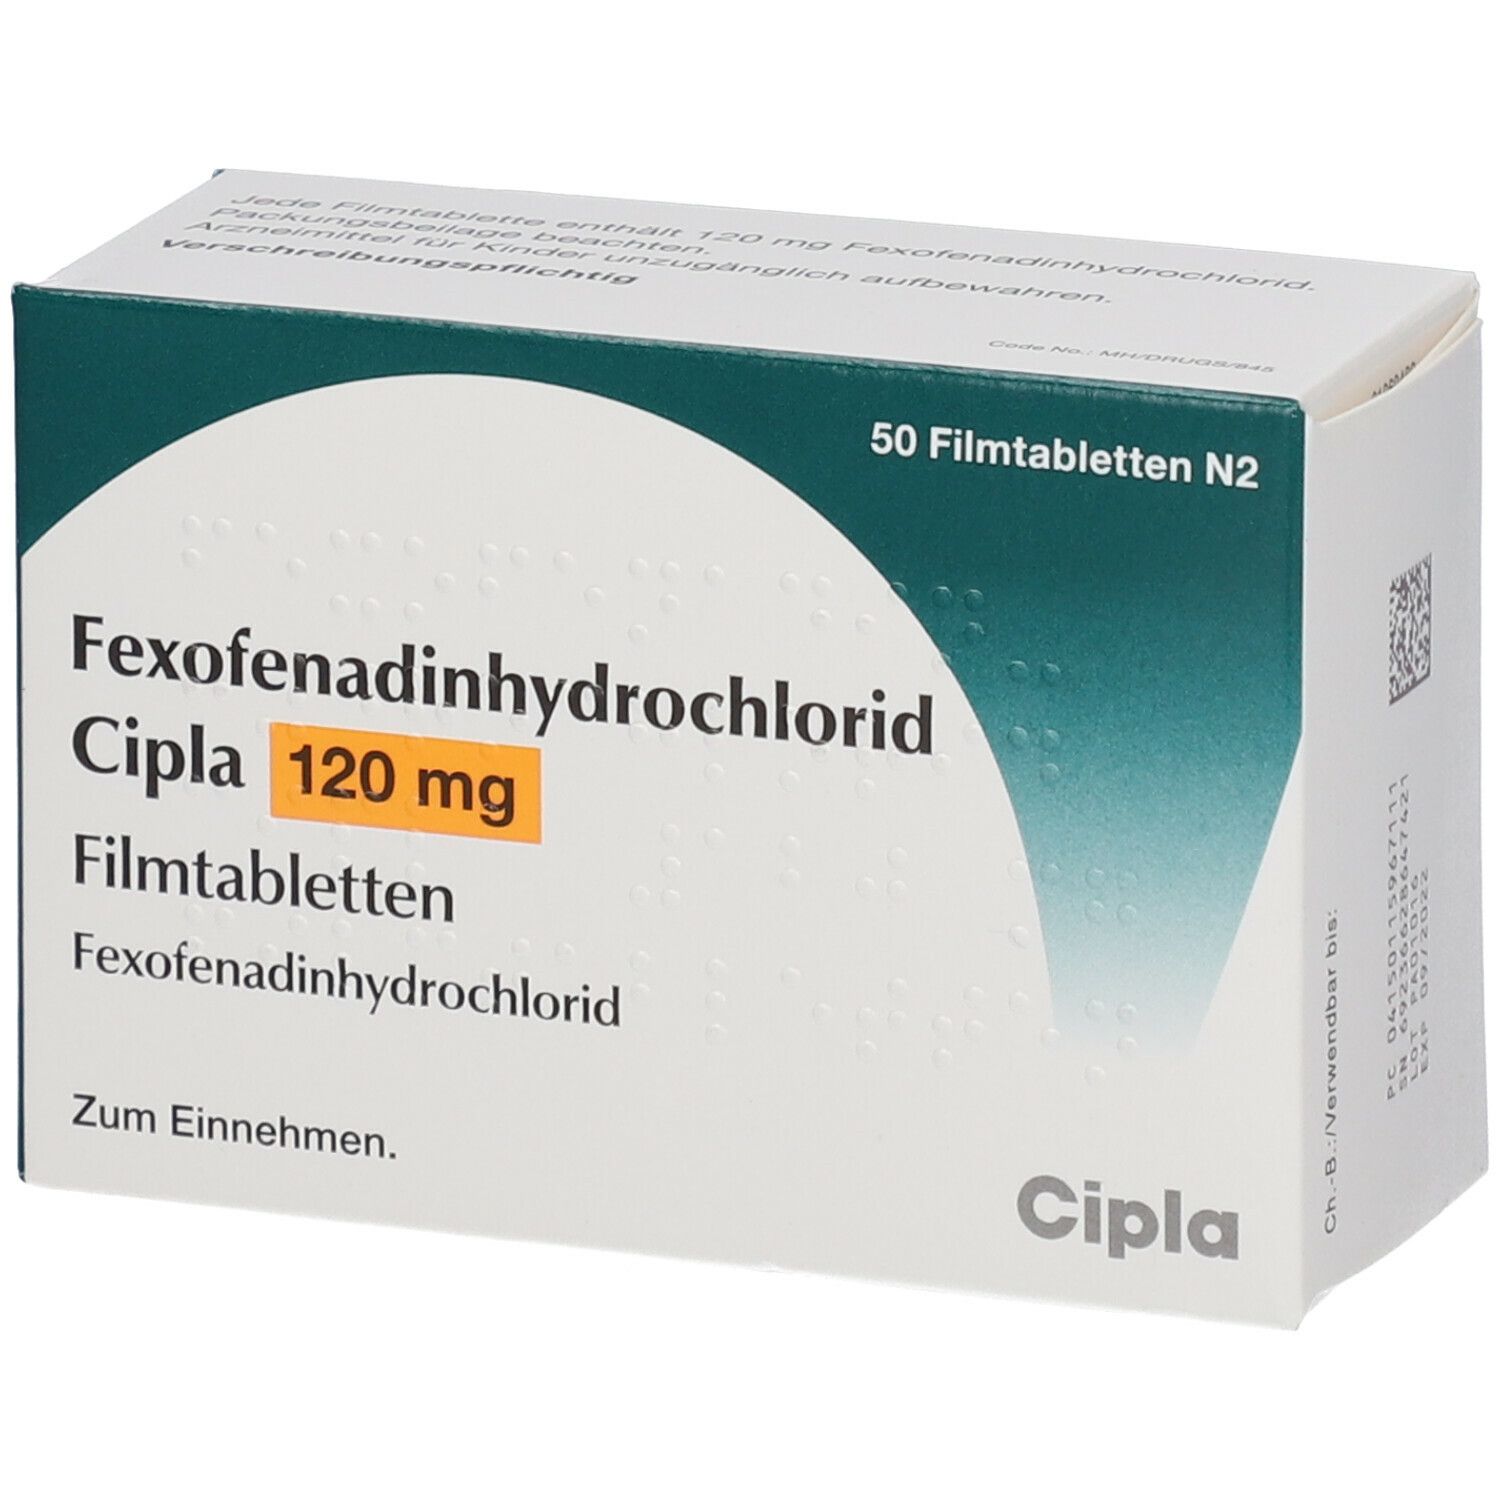 Fexofenadinhydrochlorid Cipla 120 mg